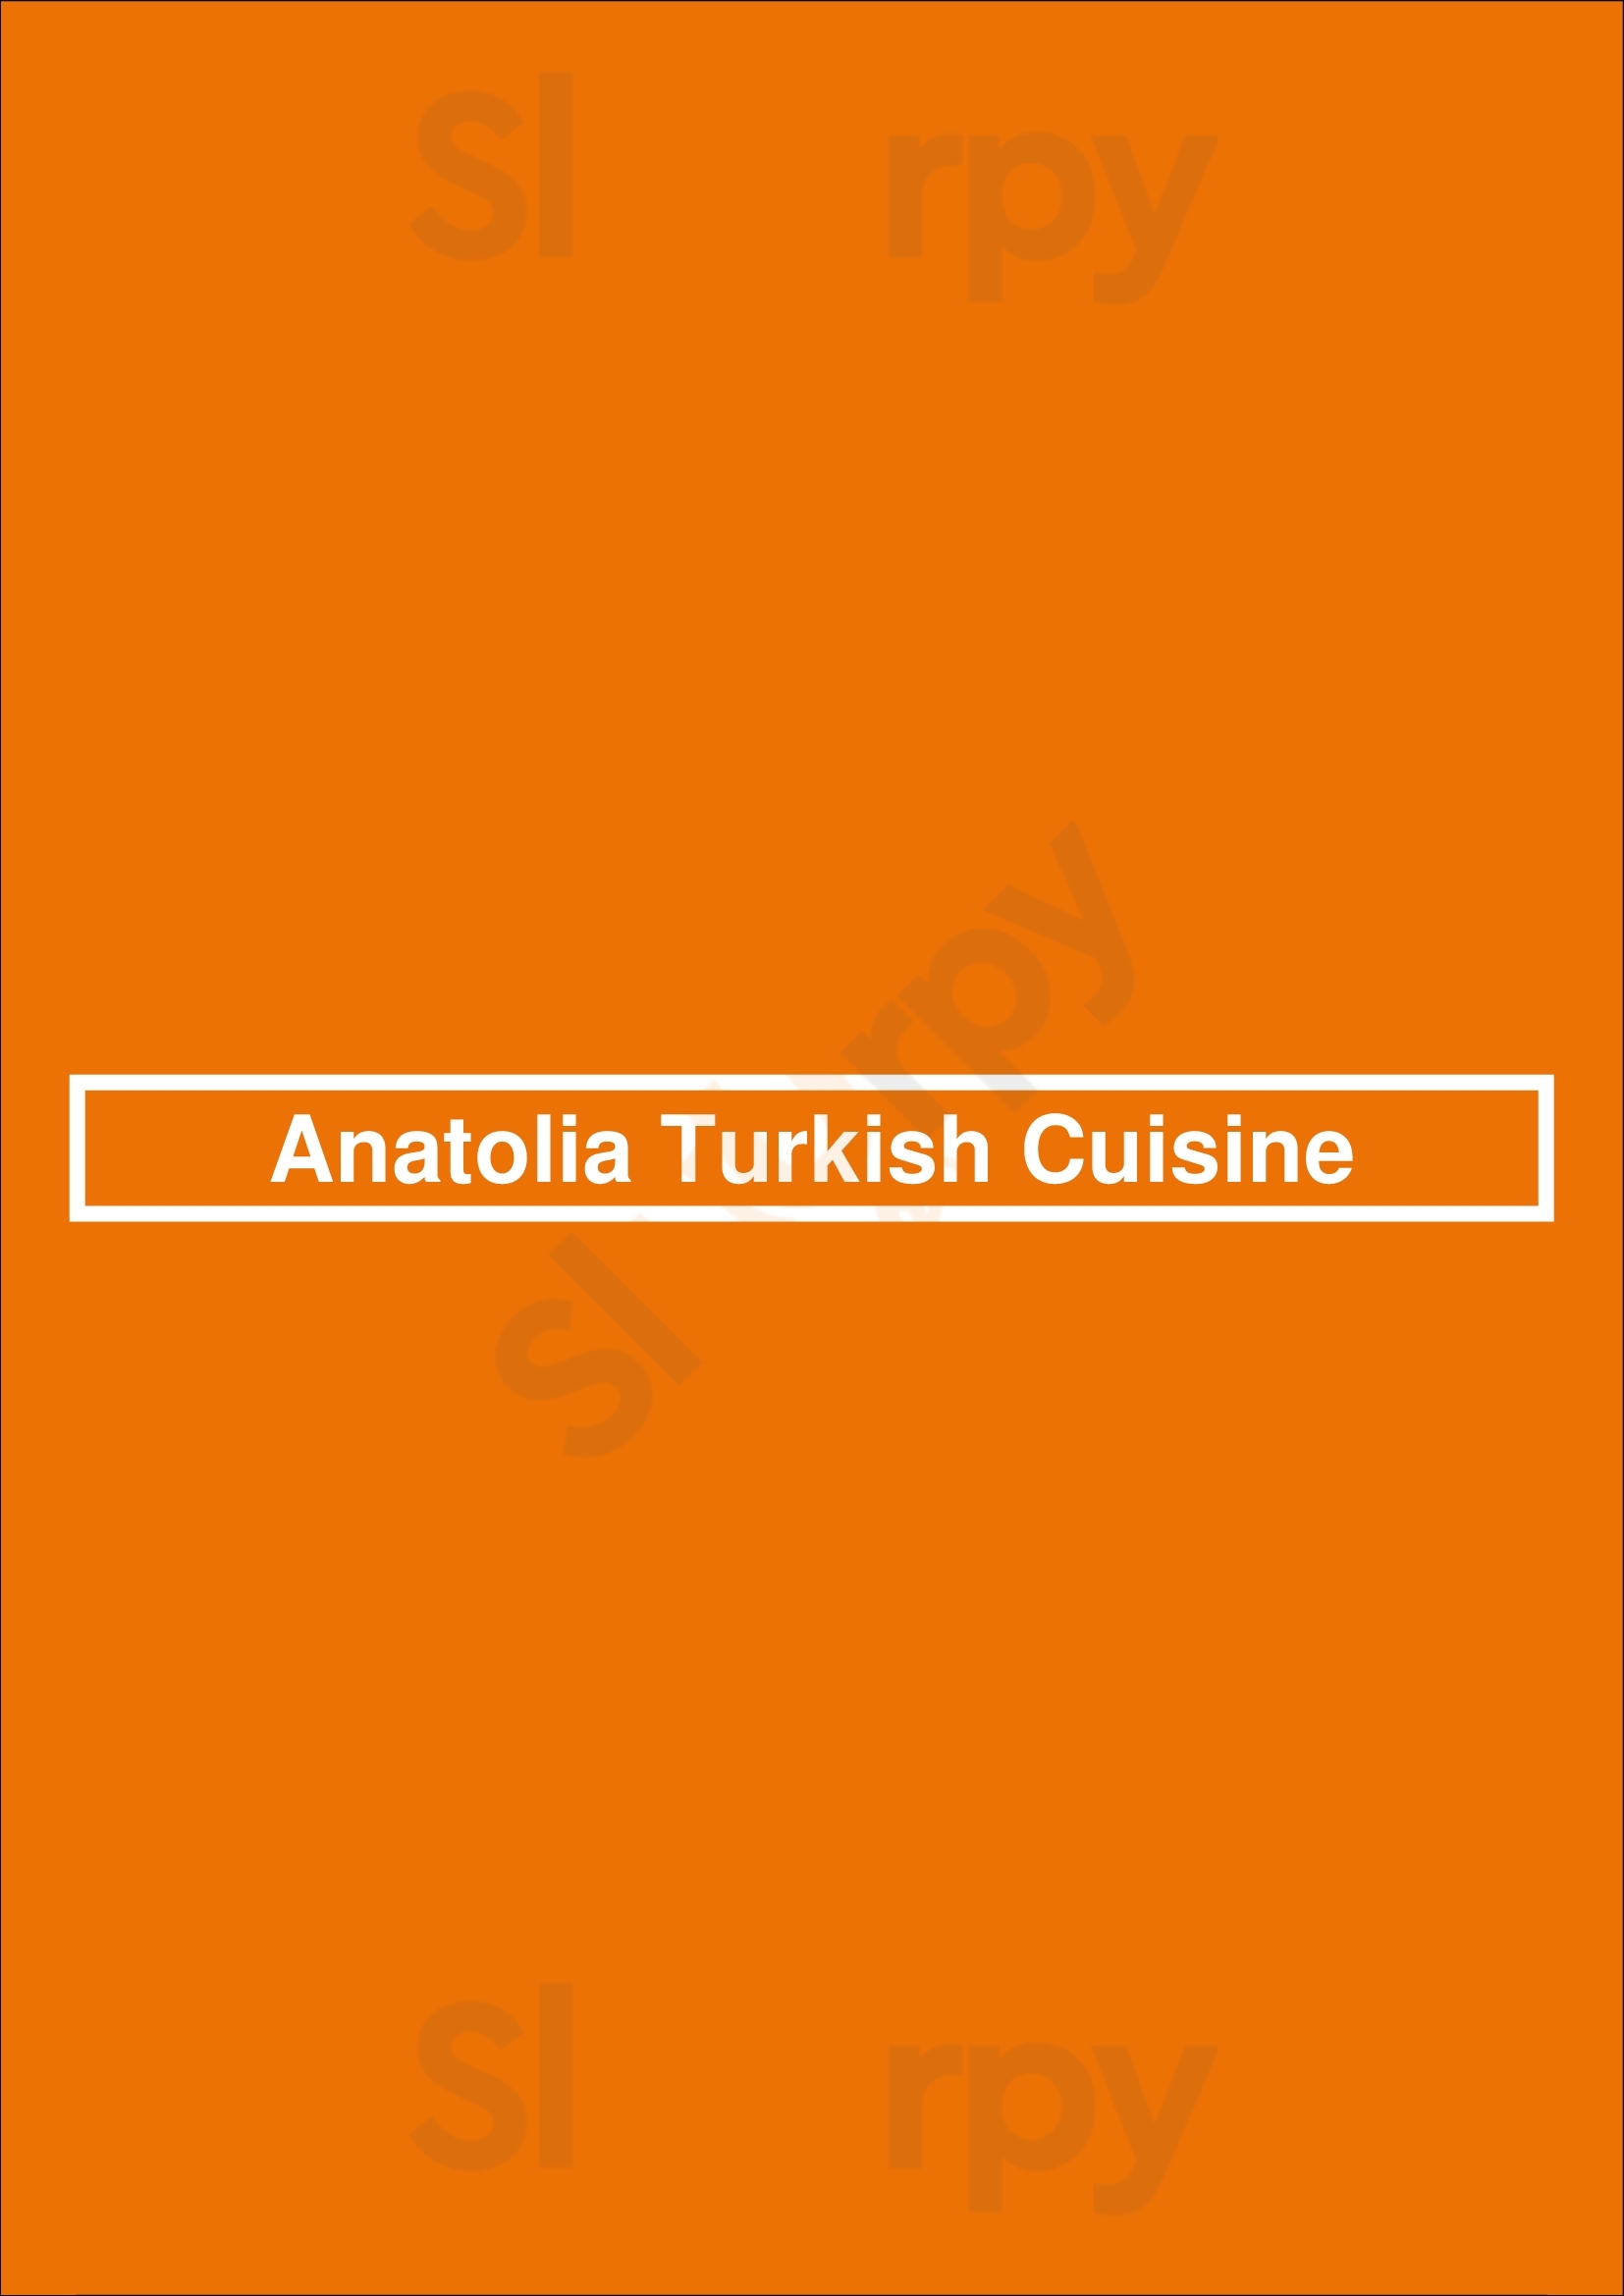 Anatolia Turkish Cuisine Calgary Menu - 1